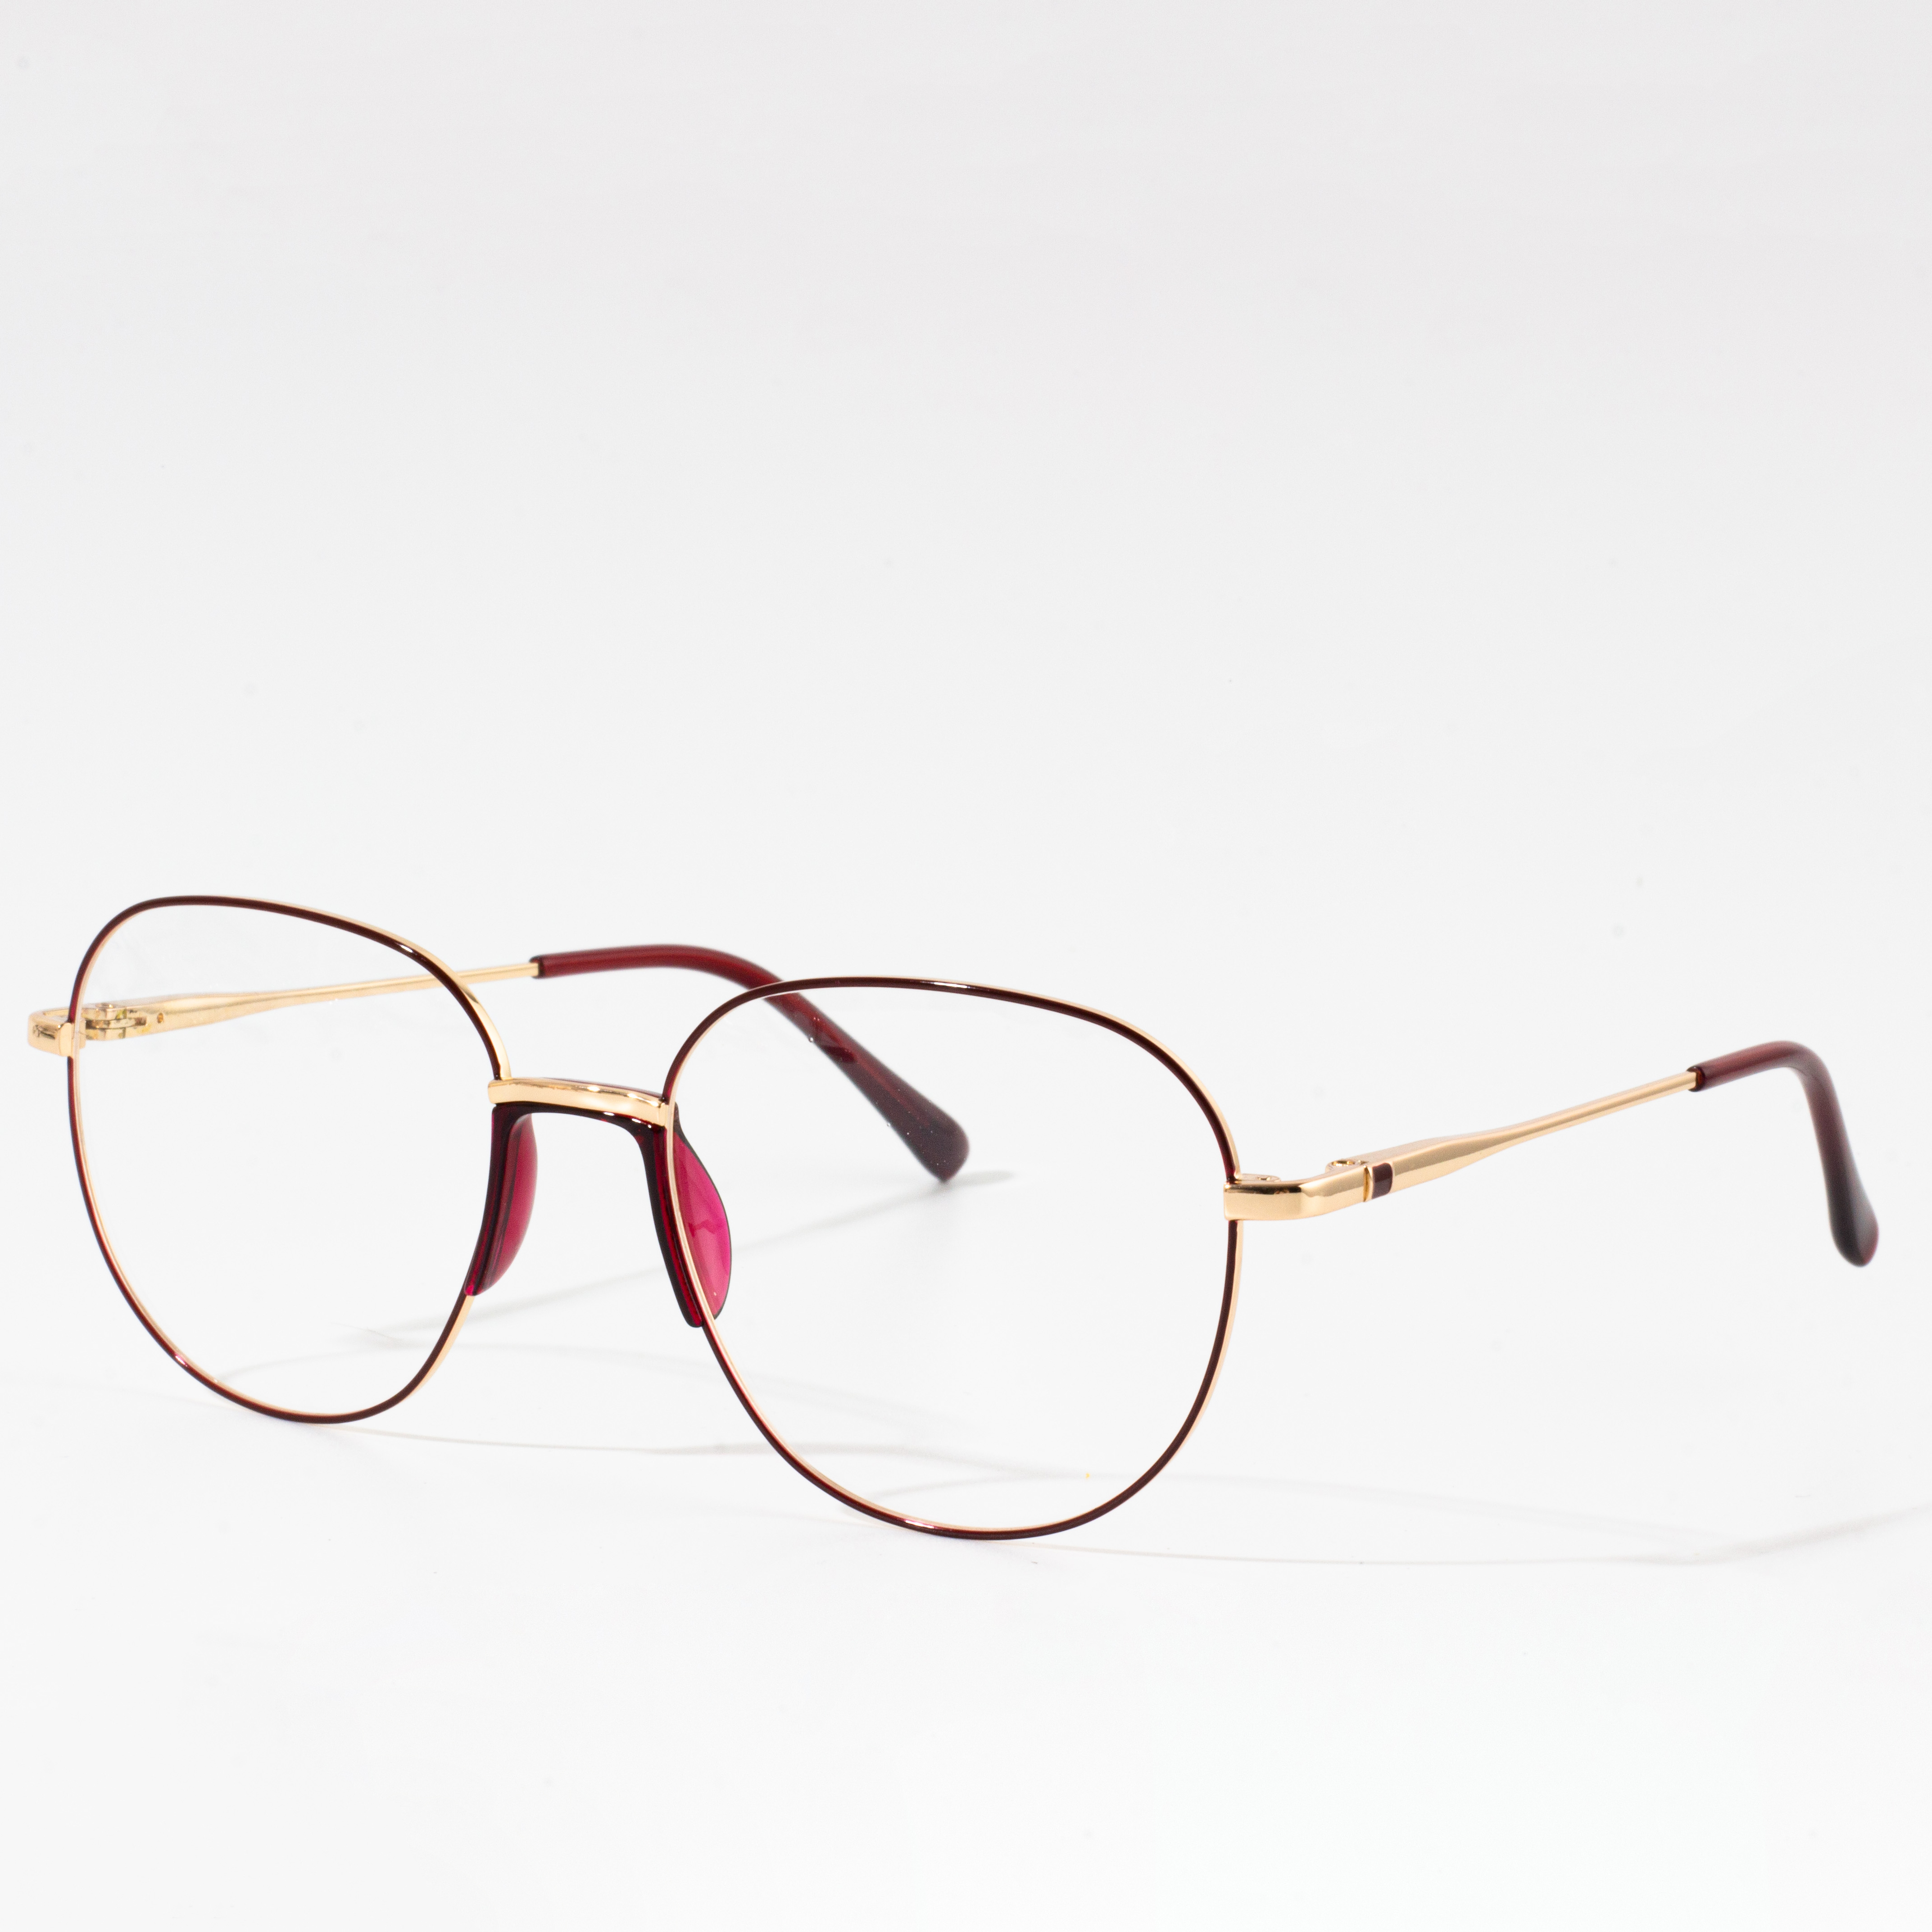 eyeglasses frames